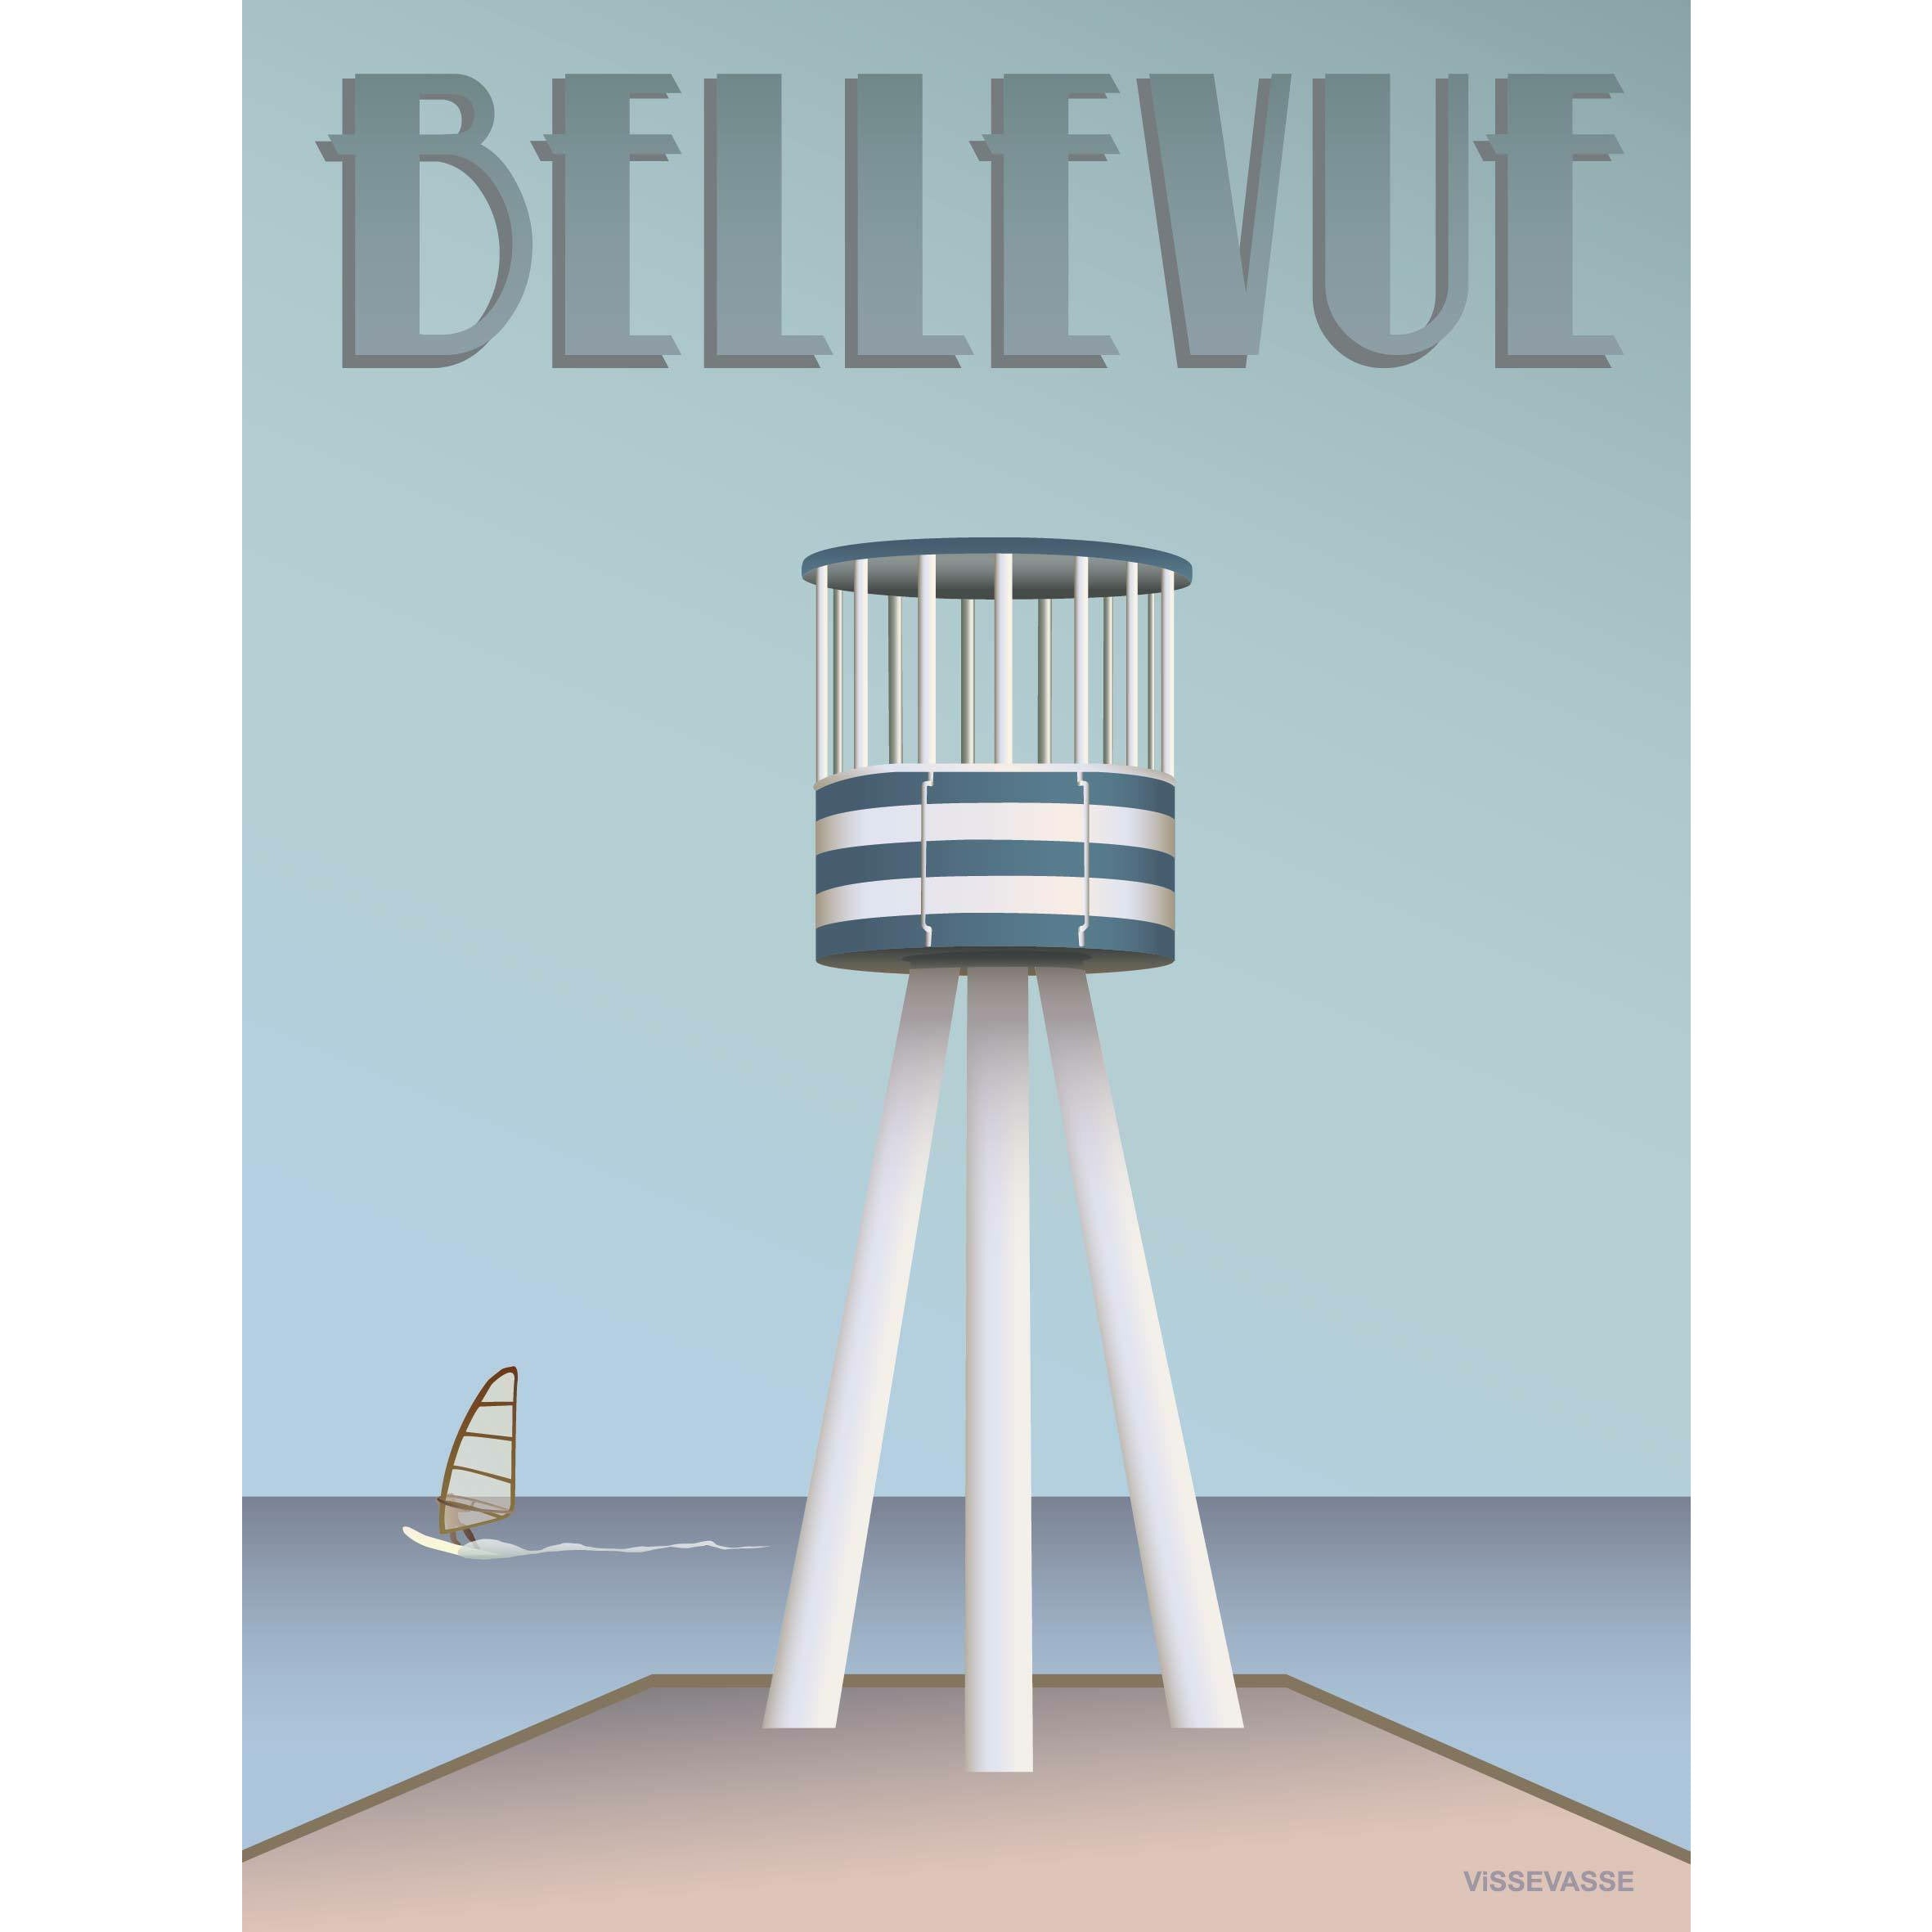 Vissevasse Bellevue Lifeguard Tower Poster, 30 X40 Cm